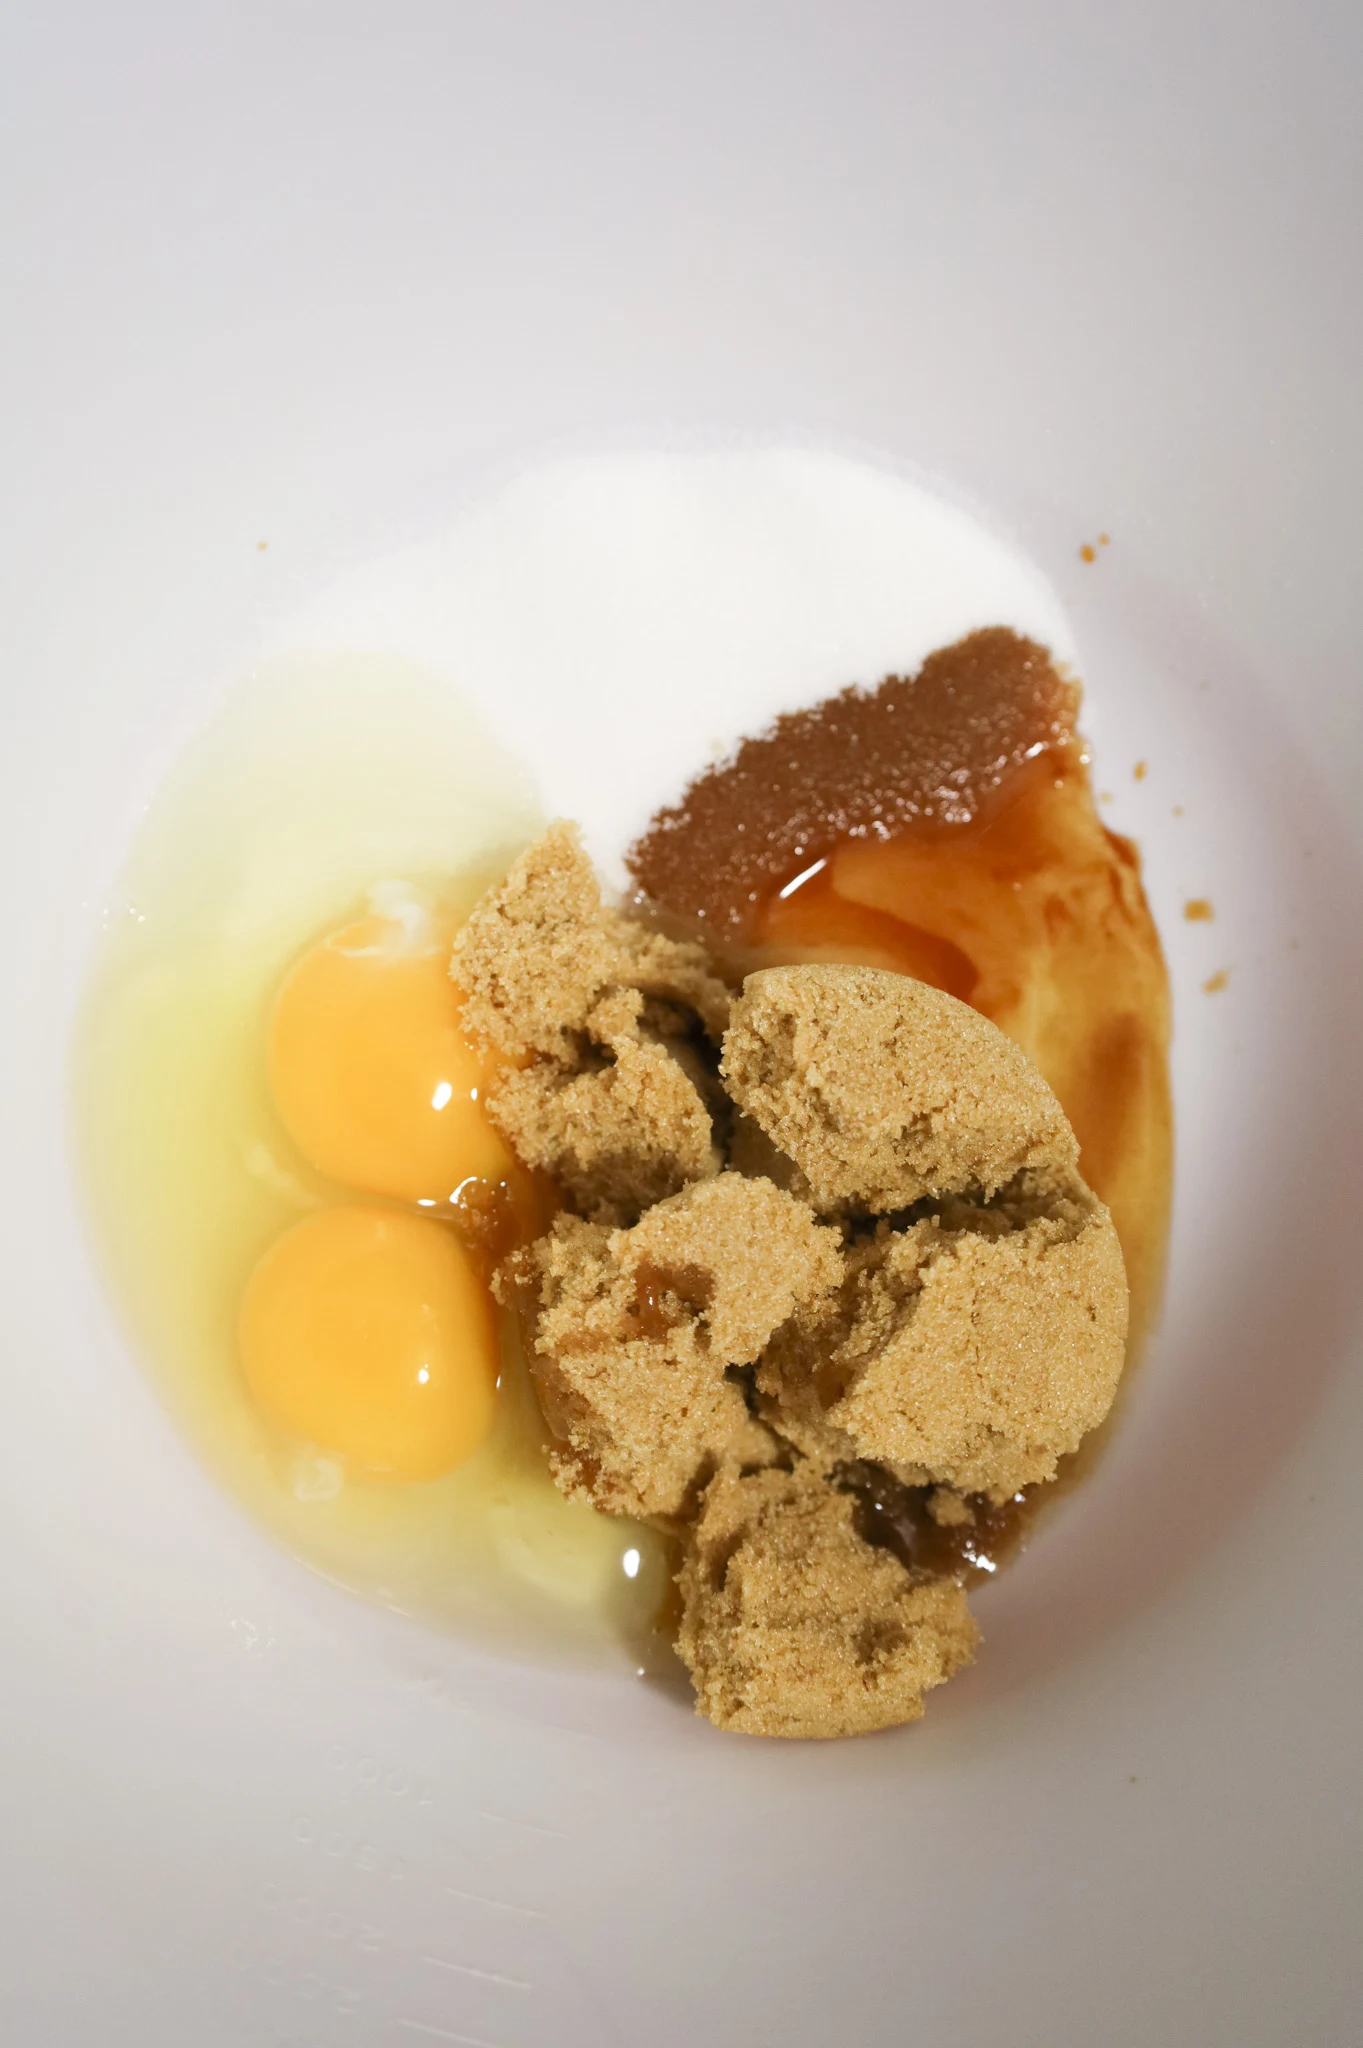 brown sugar, granulated sugar, eggs and vanilla extract in a mixing bowl